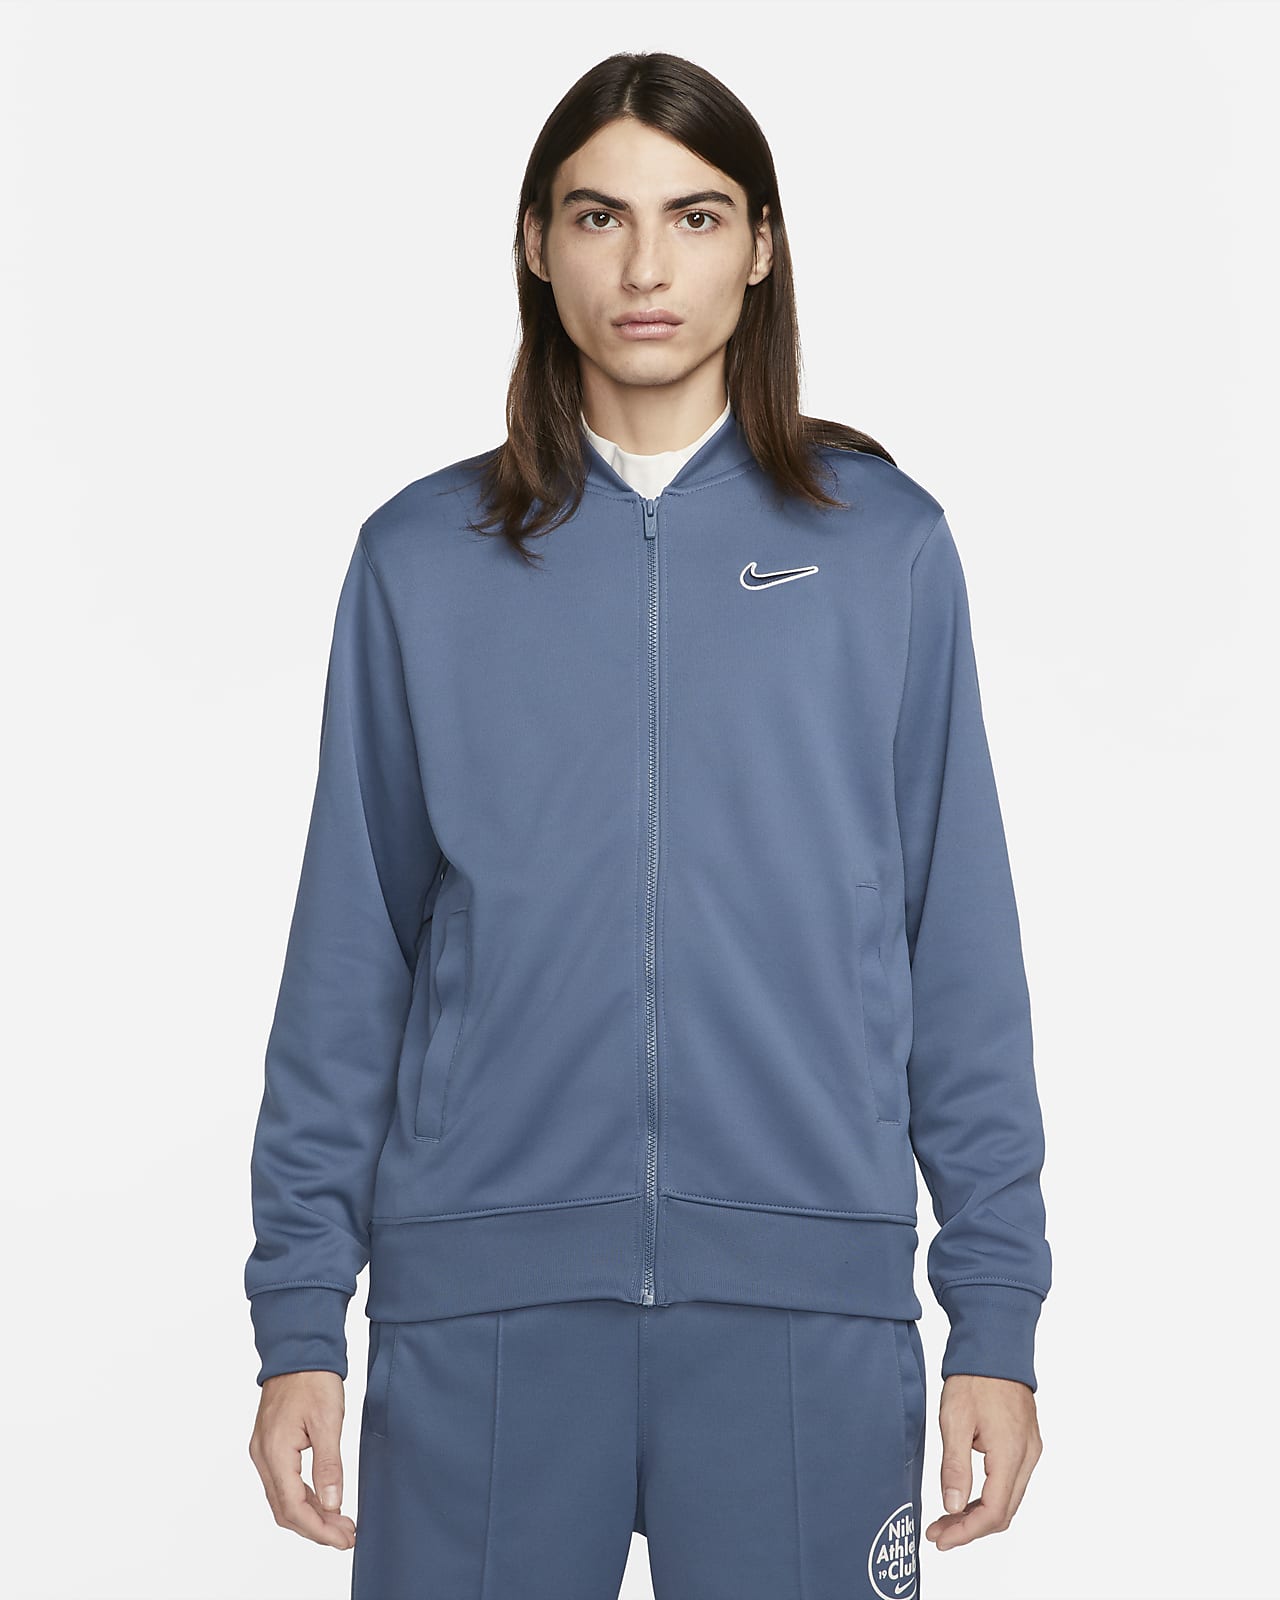 Venta anticipada cazar camisa Nike Sportswear Trend Men's Bomber Jacket. Nike LU